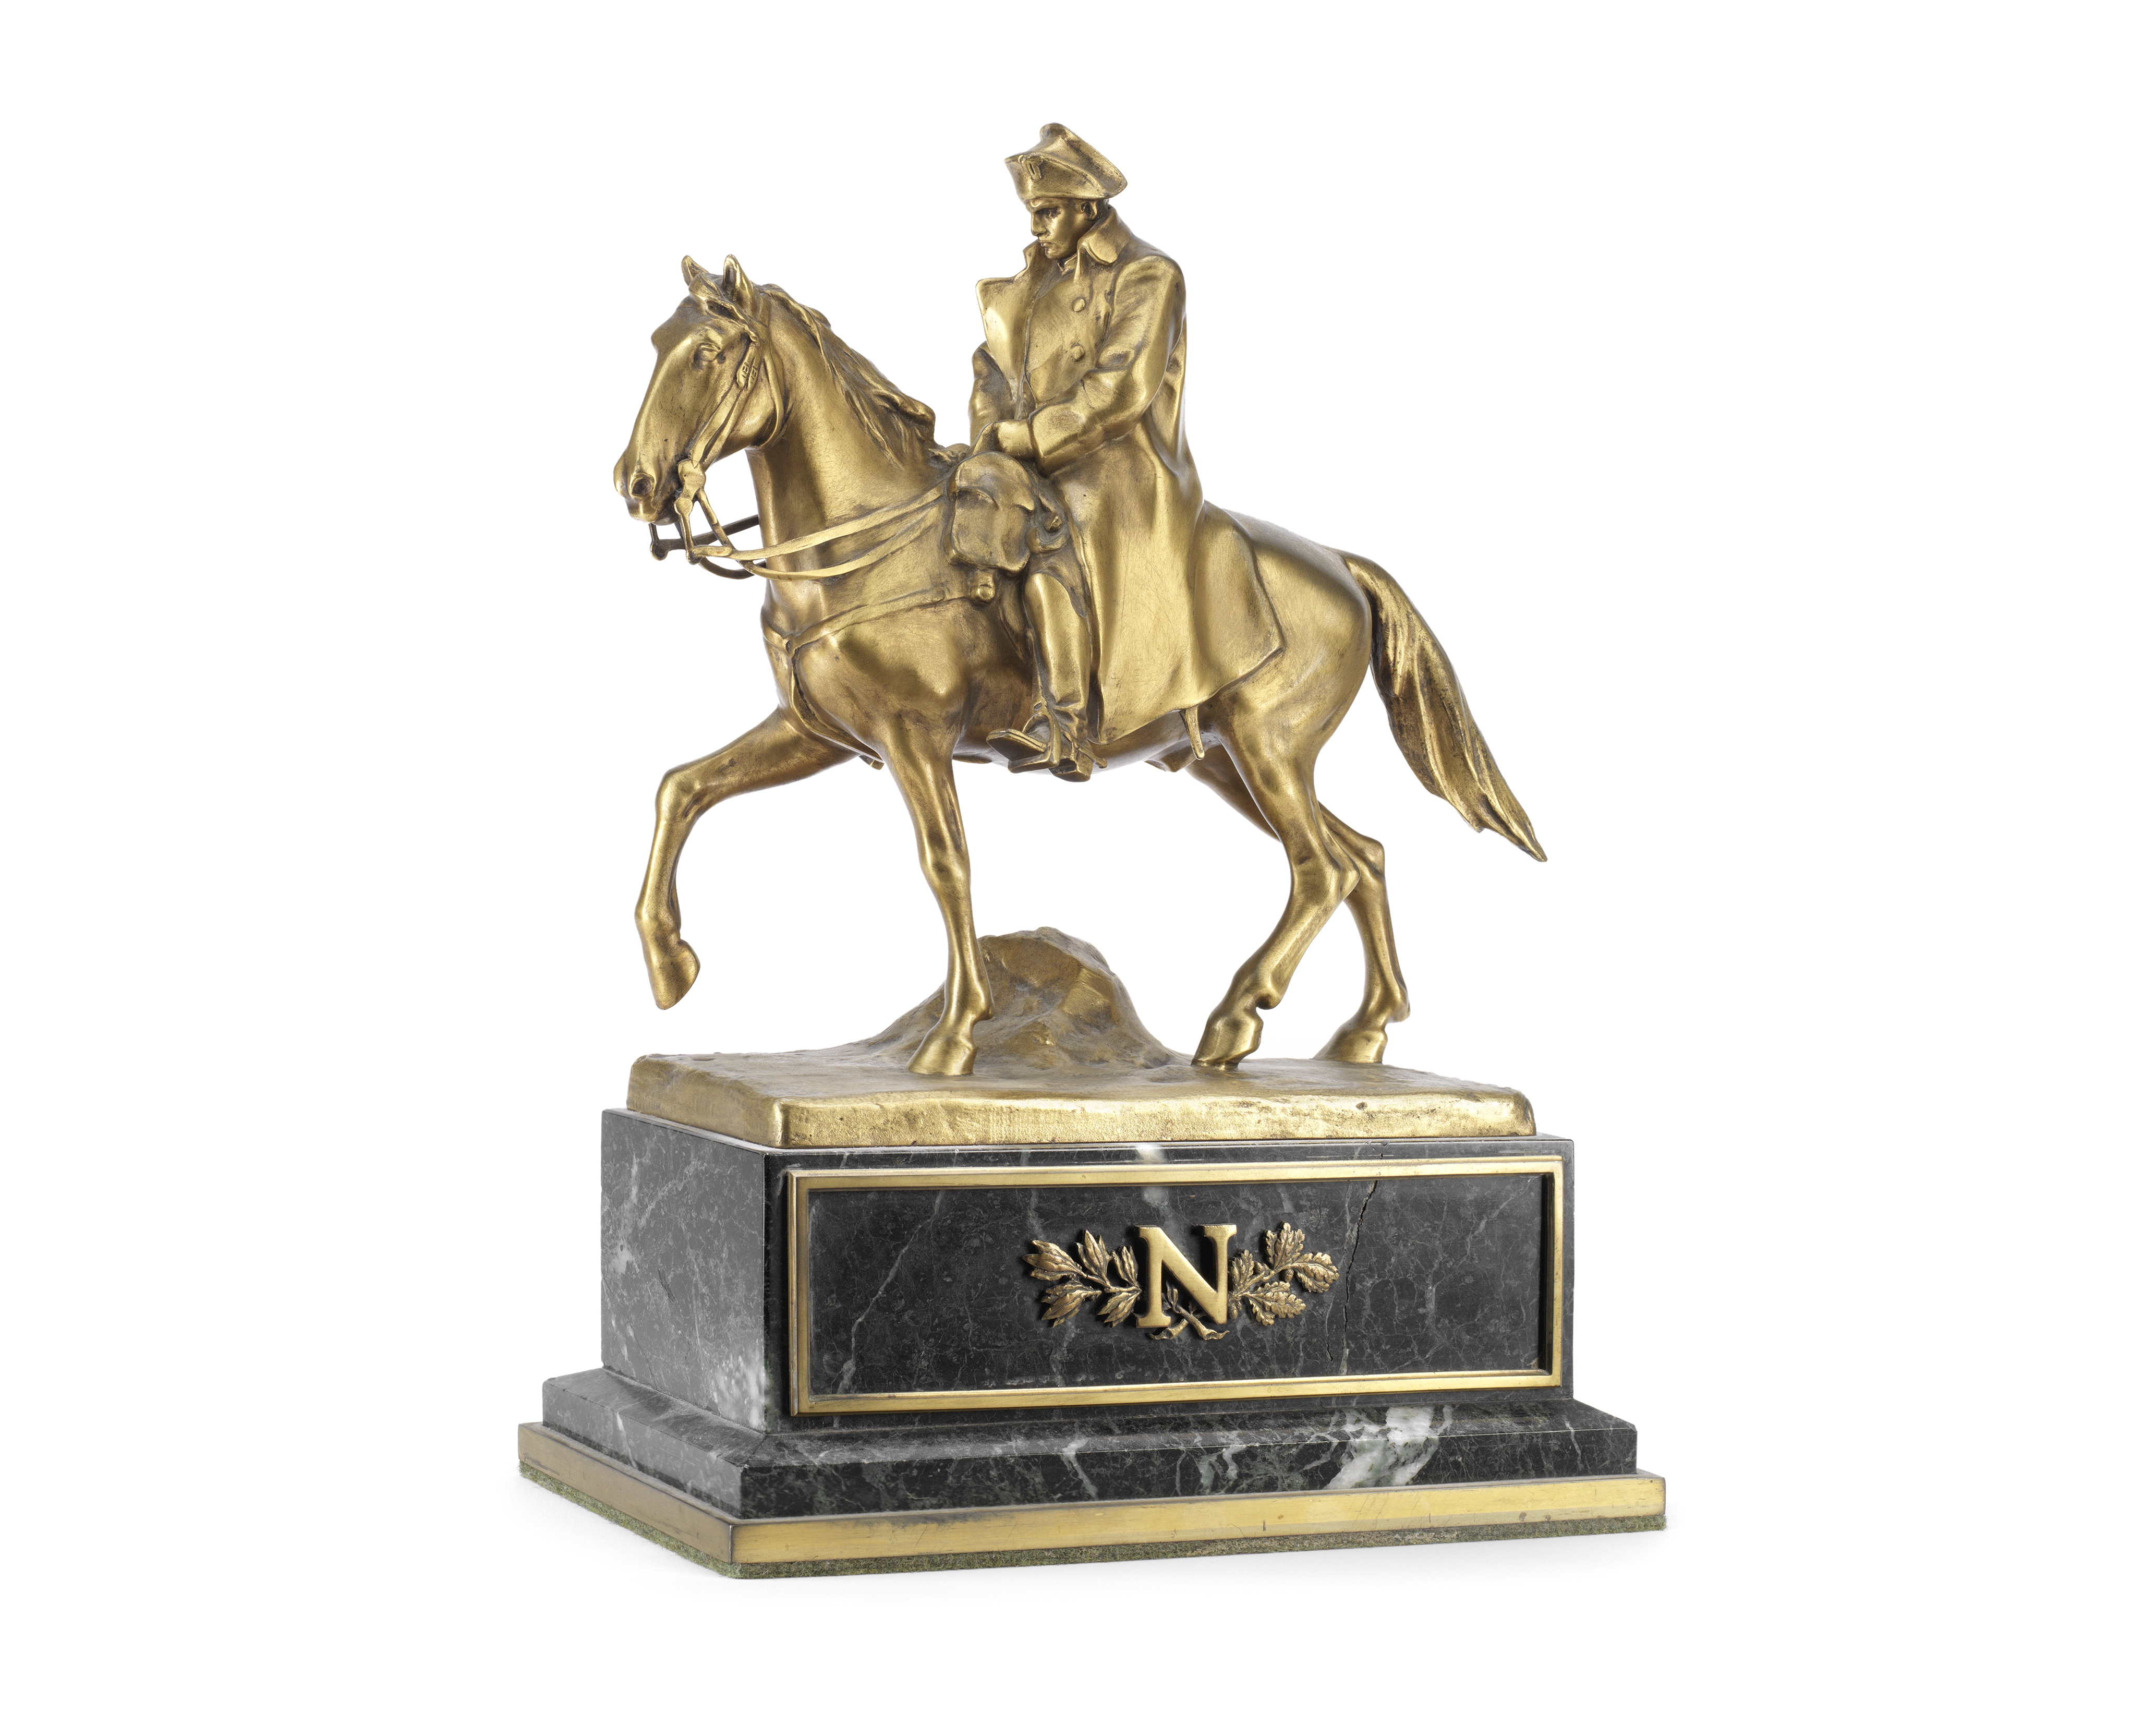 Hans Muller (Austrian, 1873-1937): A gilt bronze equestrian model of Napoleon